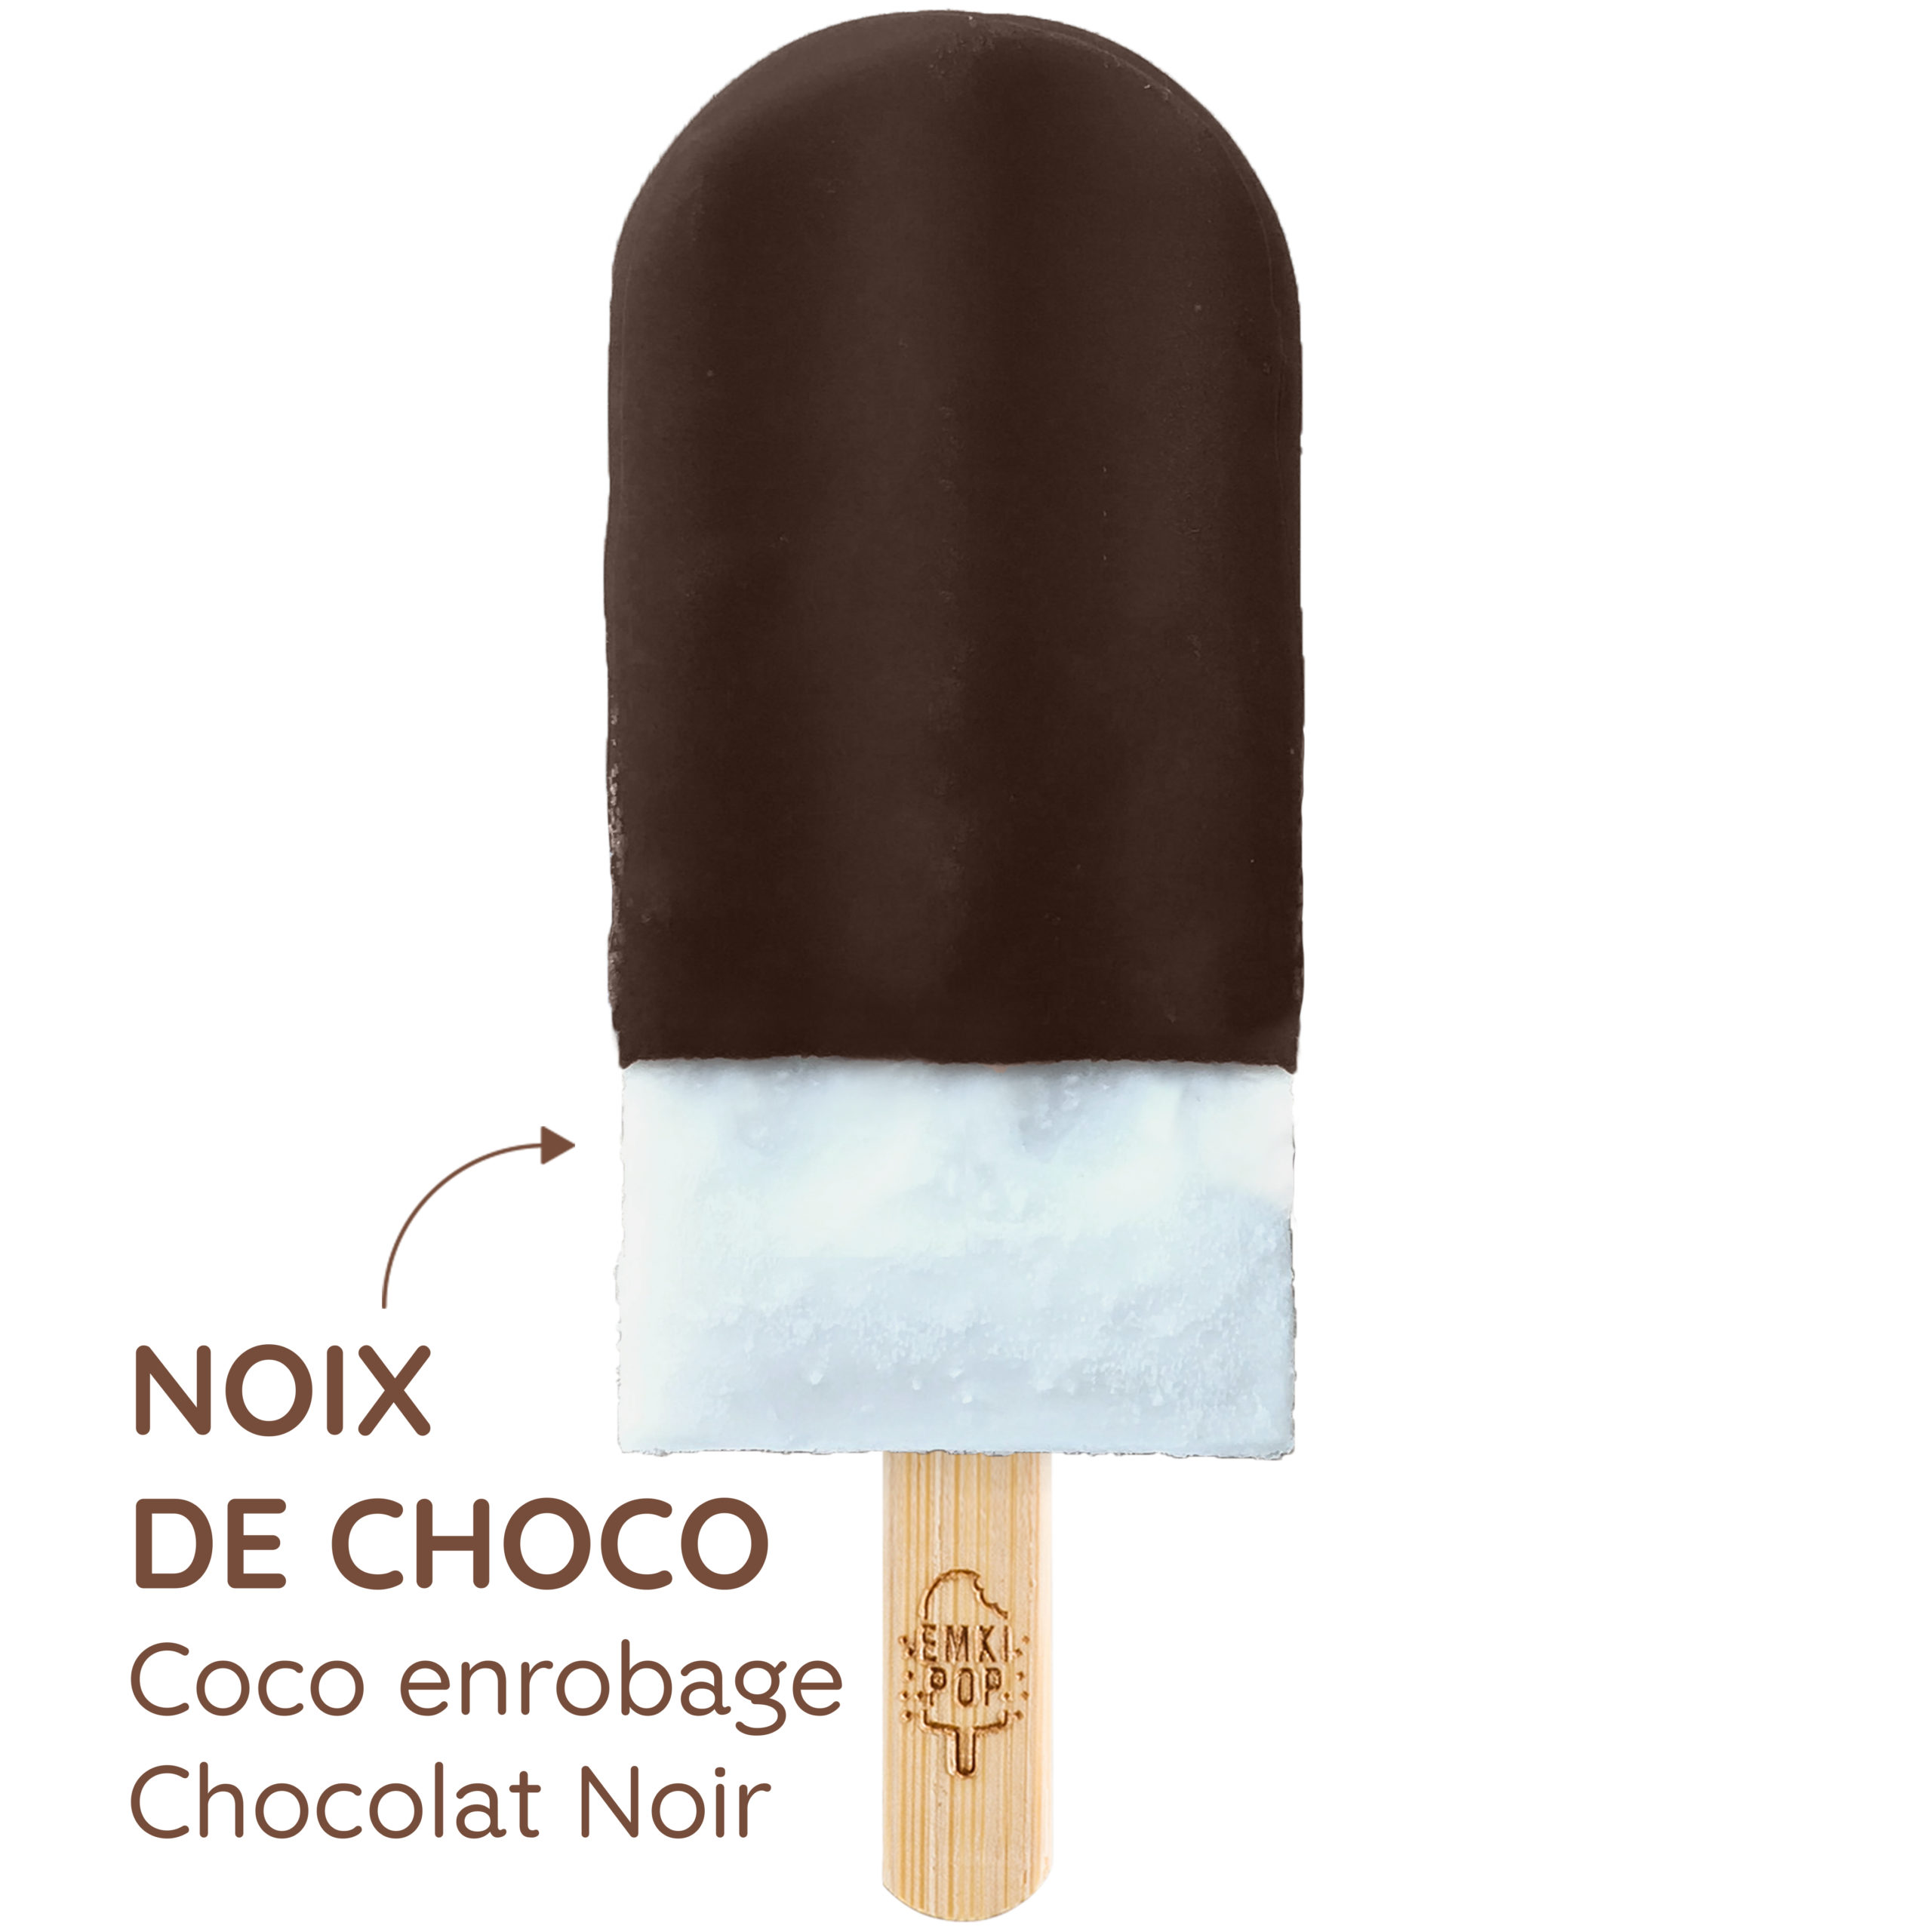 Noix de Choco - Coco enrobage Chocolat Noir | Glace Artisanale